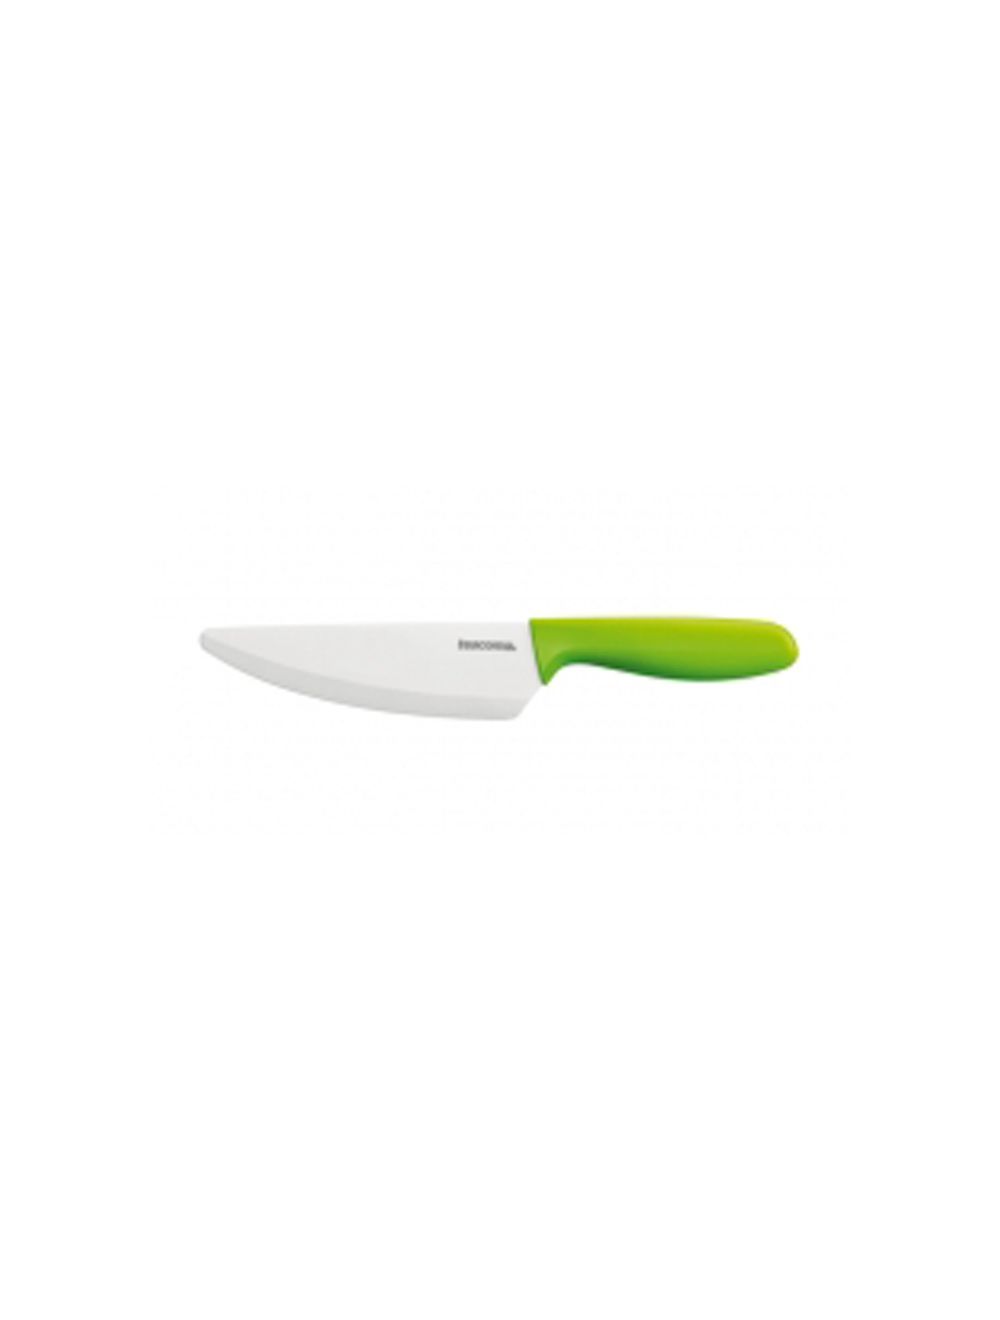 Vitamino Knife With Ceramic Blade 15 cm - Assorted Colour